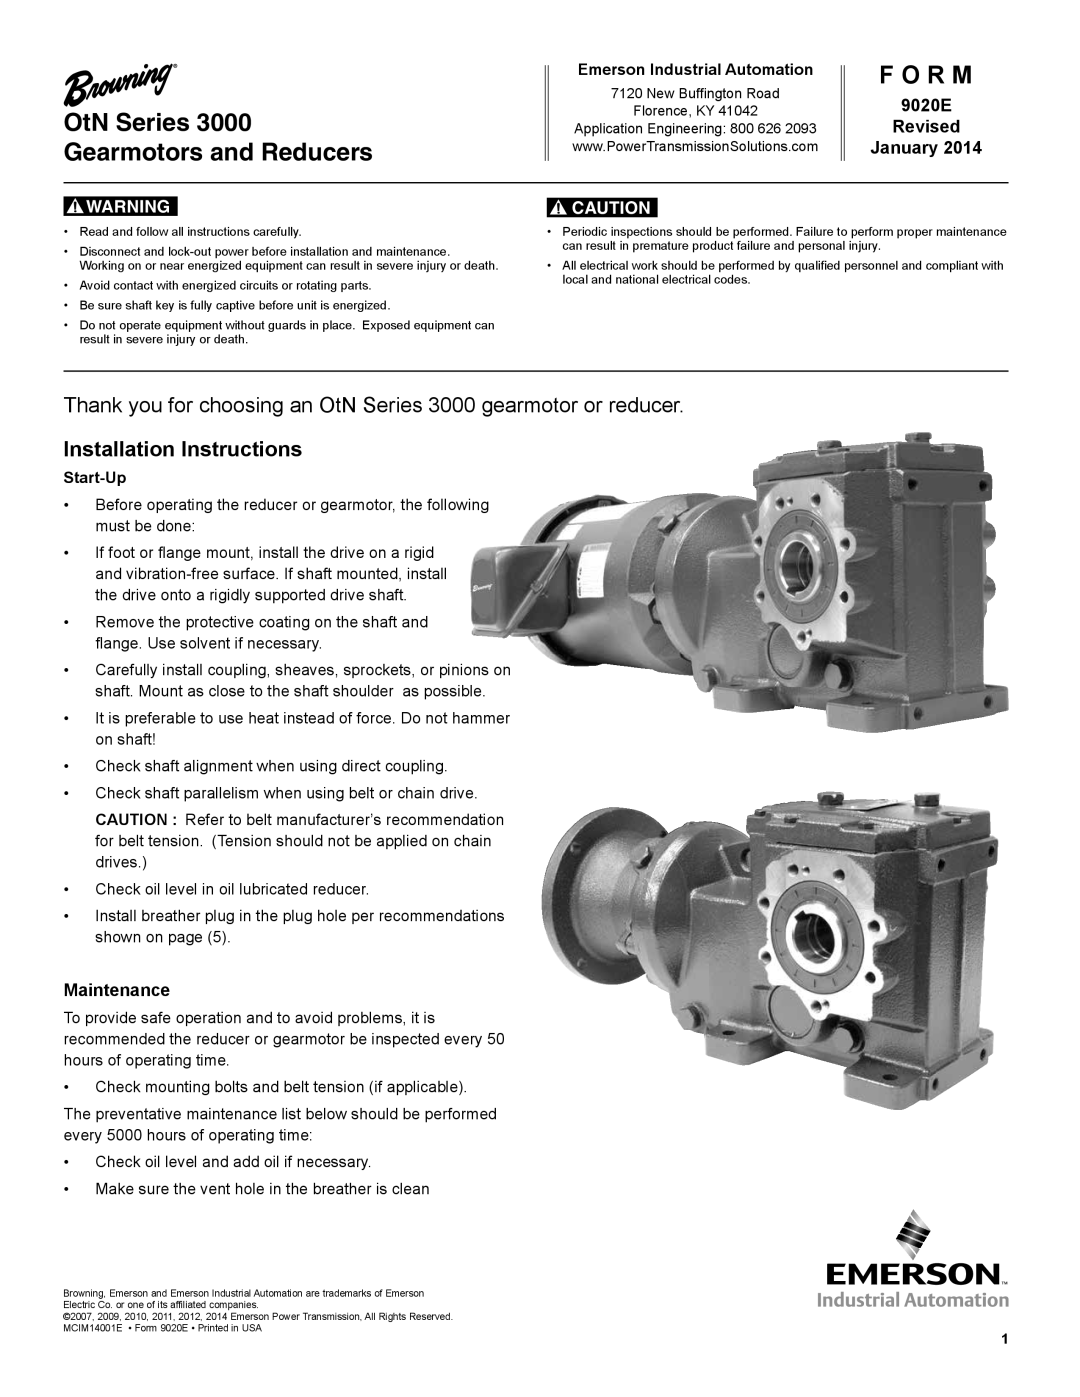 Emerson instruction manual Oxygen Analyzer, with IFT 3000 Intelligent Field Transmitter, Instruction Manual 